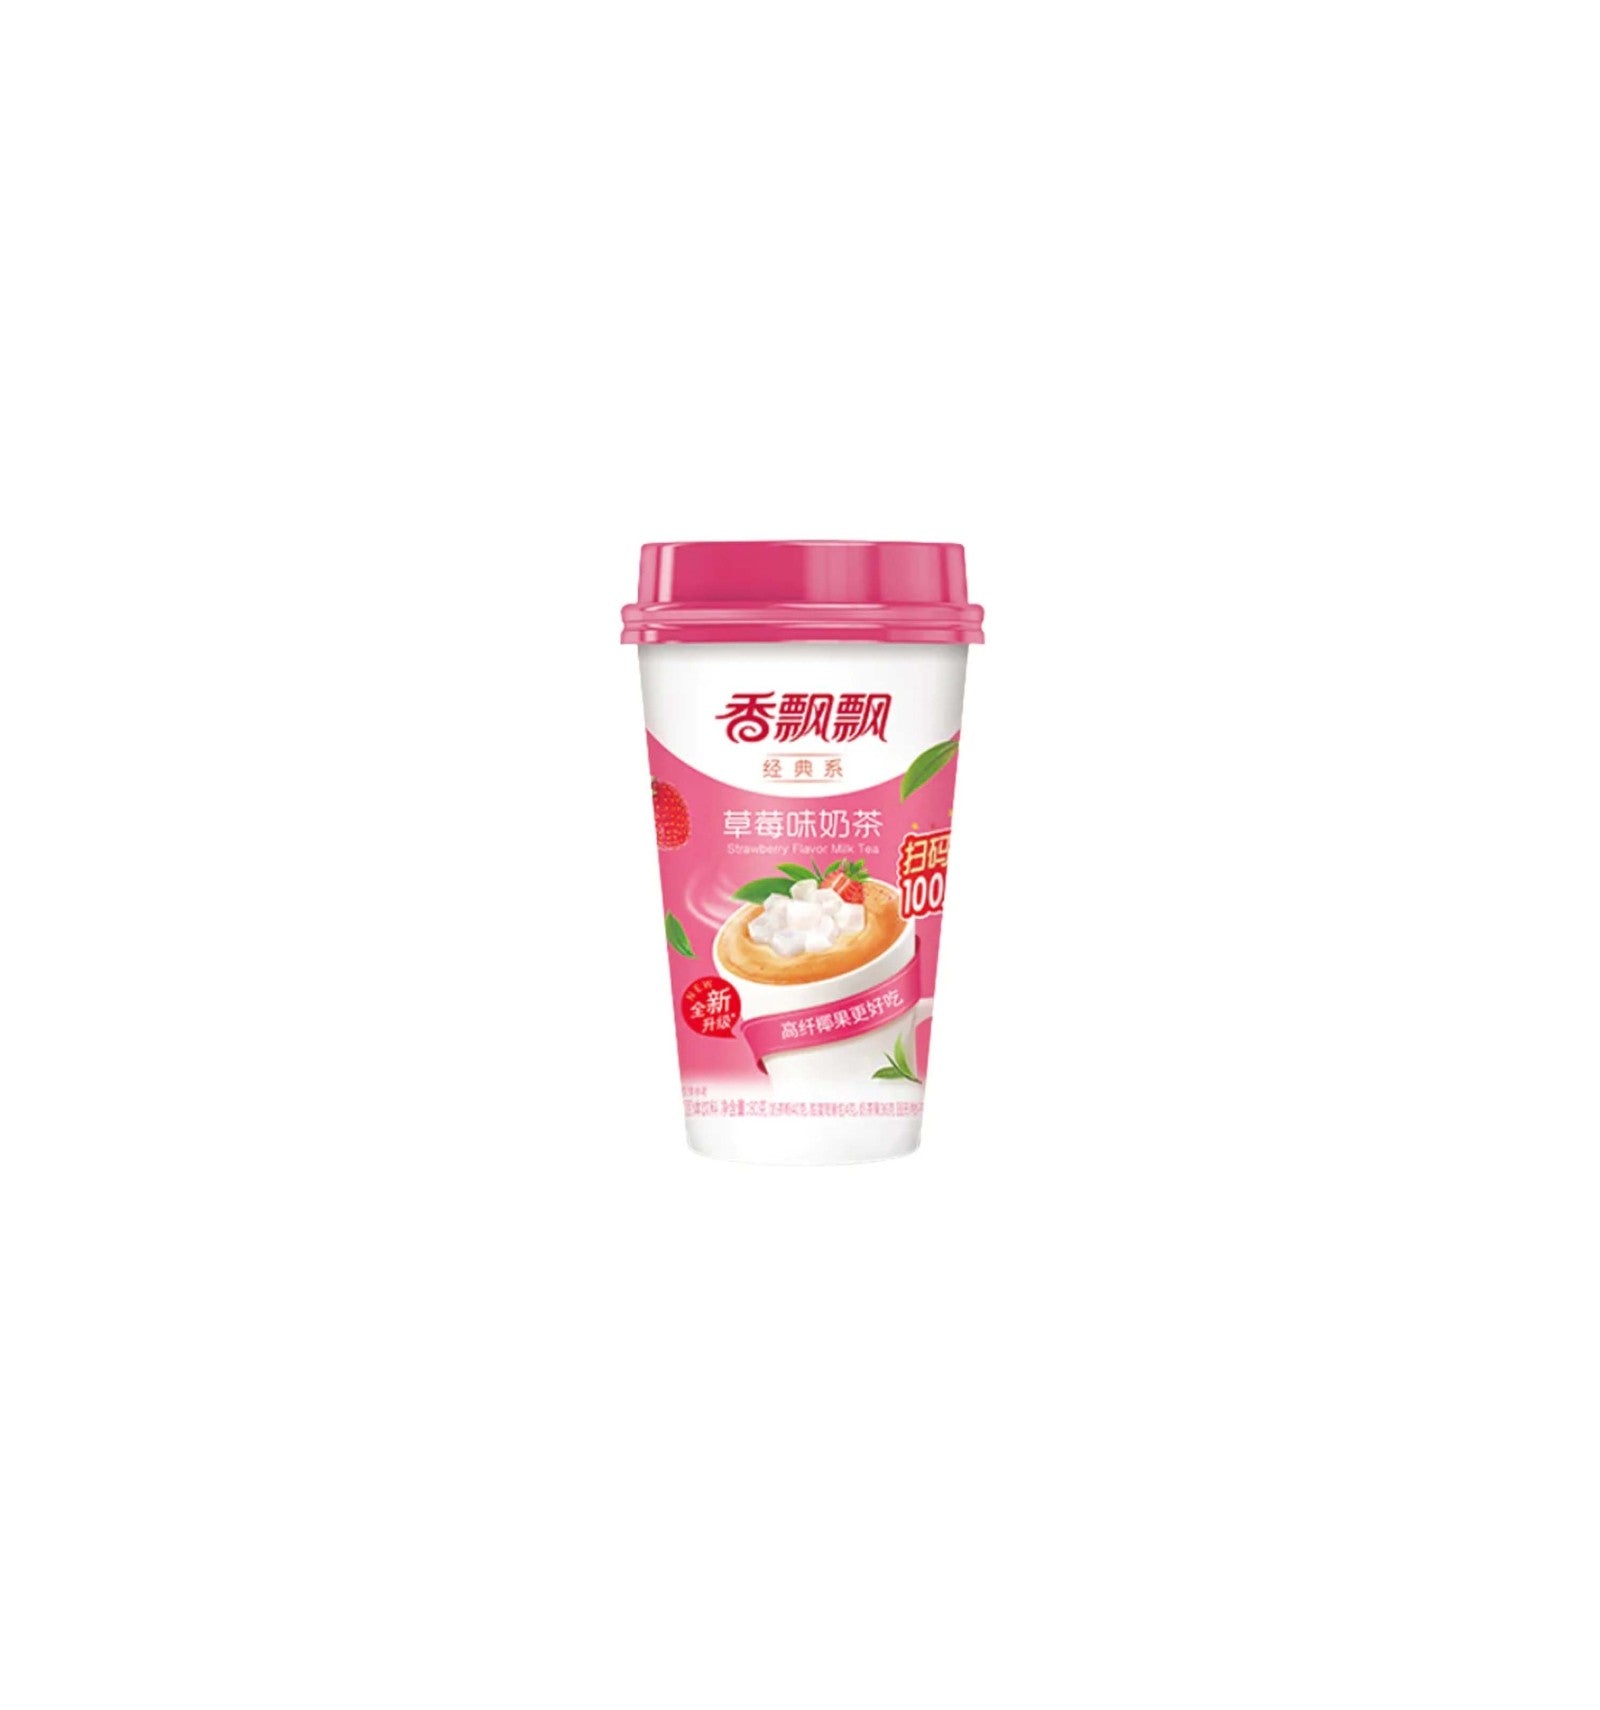 香飘飘奶茶-草莓味 Xiangpiaopiao Strawberry Milk Tea 80g